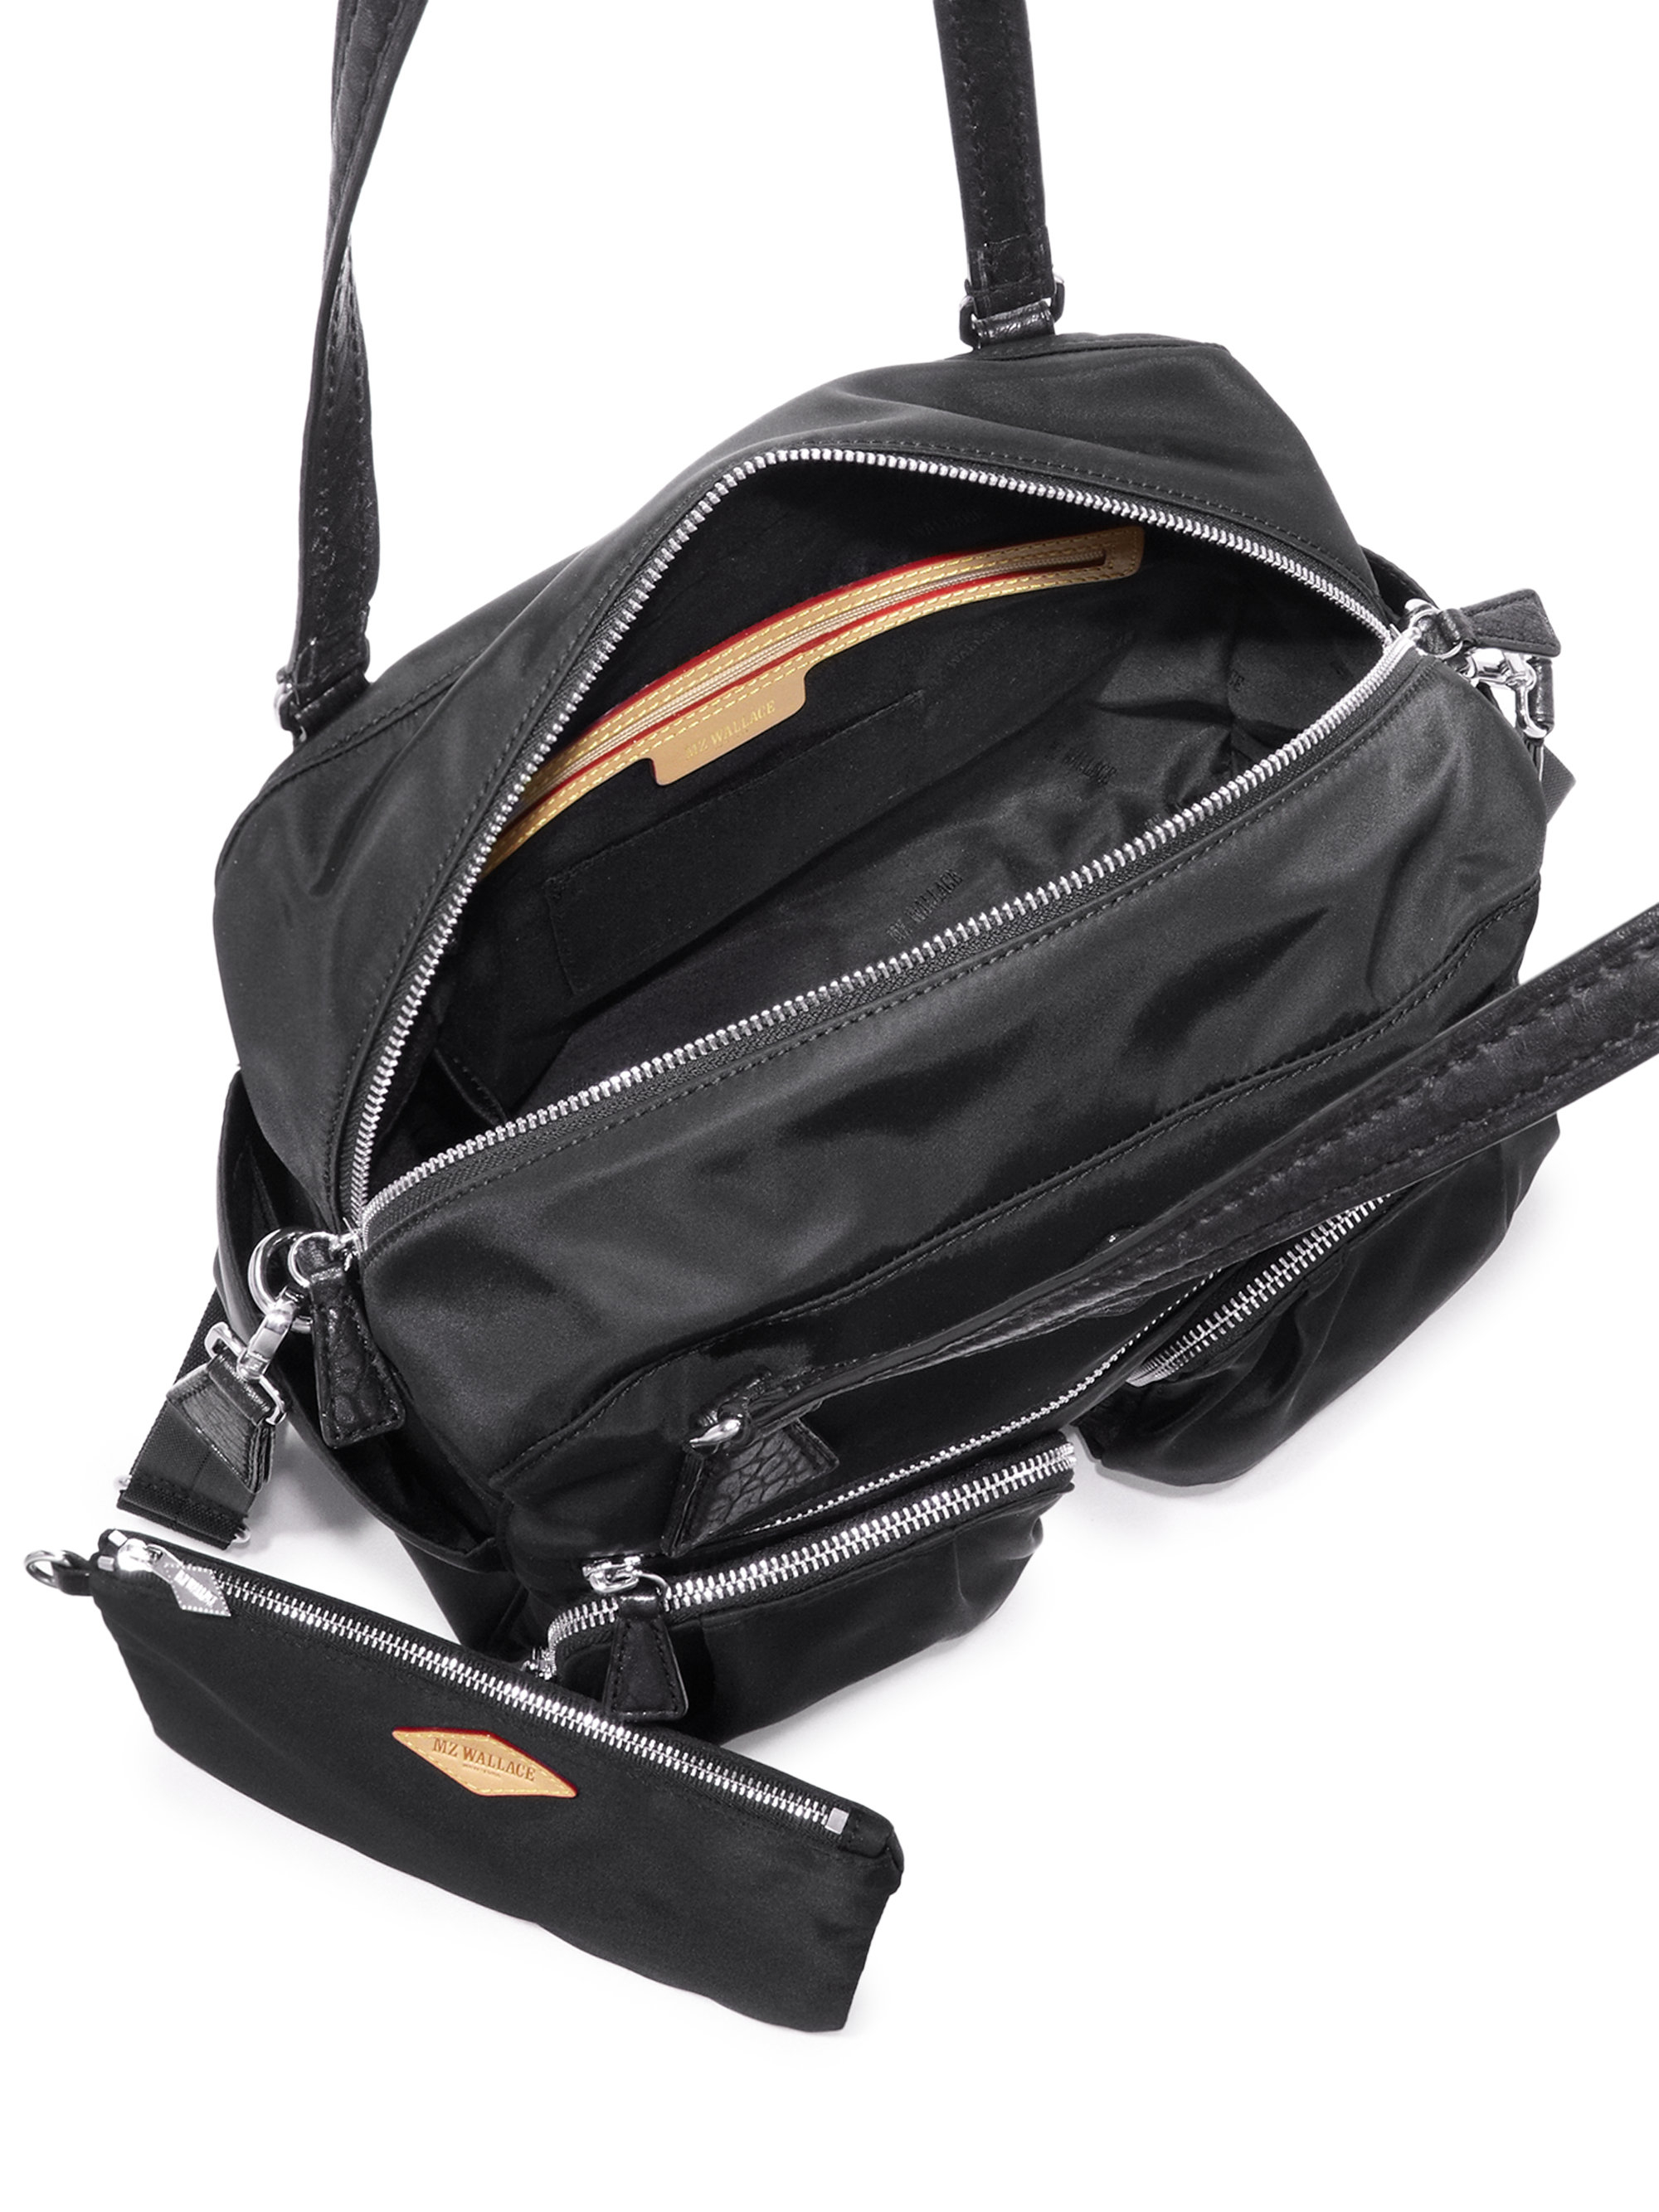 Lyst - Mz Wallace Roxy Nylon & Metallic Leather Crossbody Bag in Black